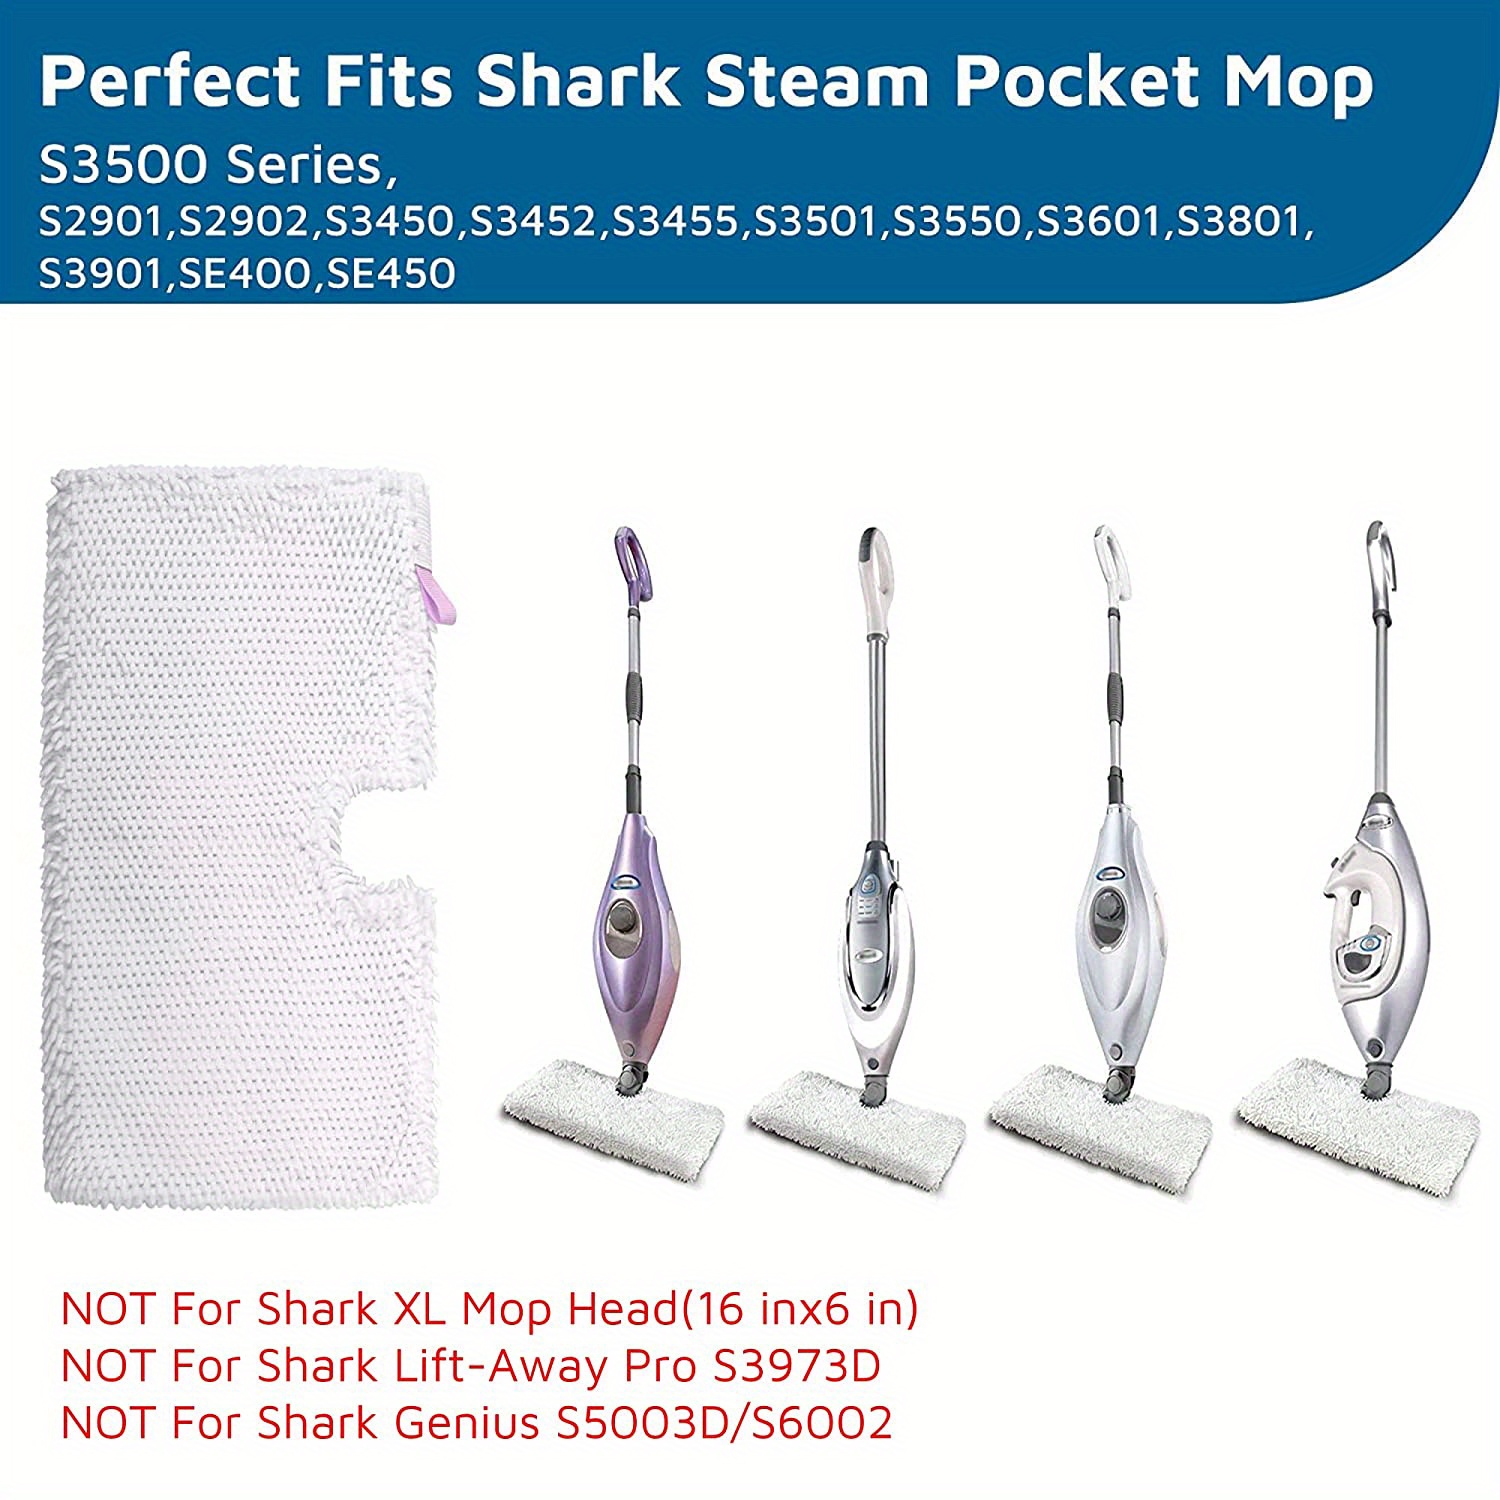 Shark S3601 Professional Steam Pocket Mop, Free Shipping